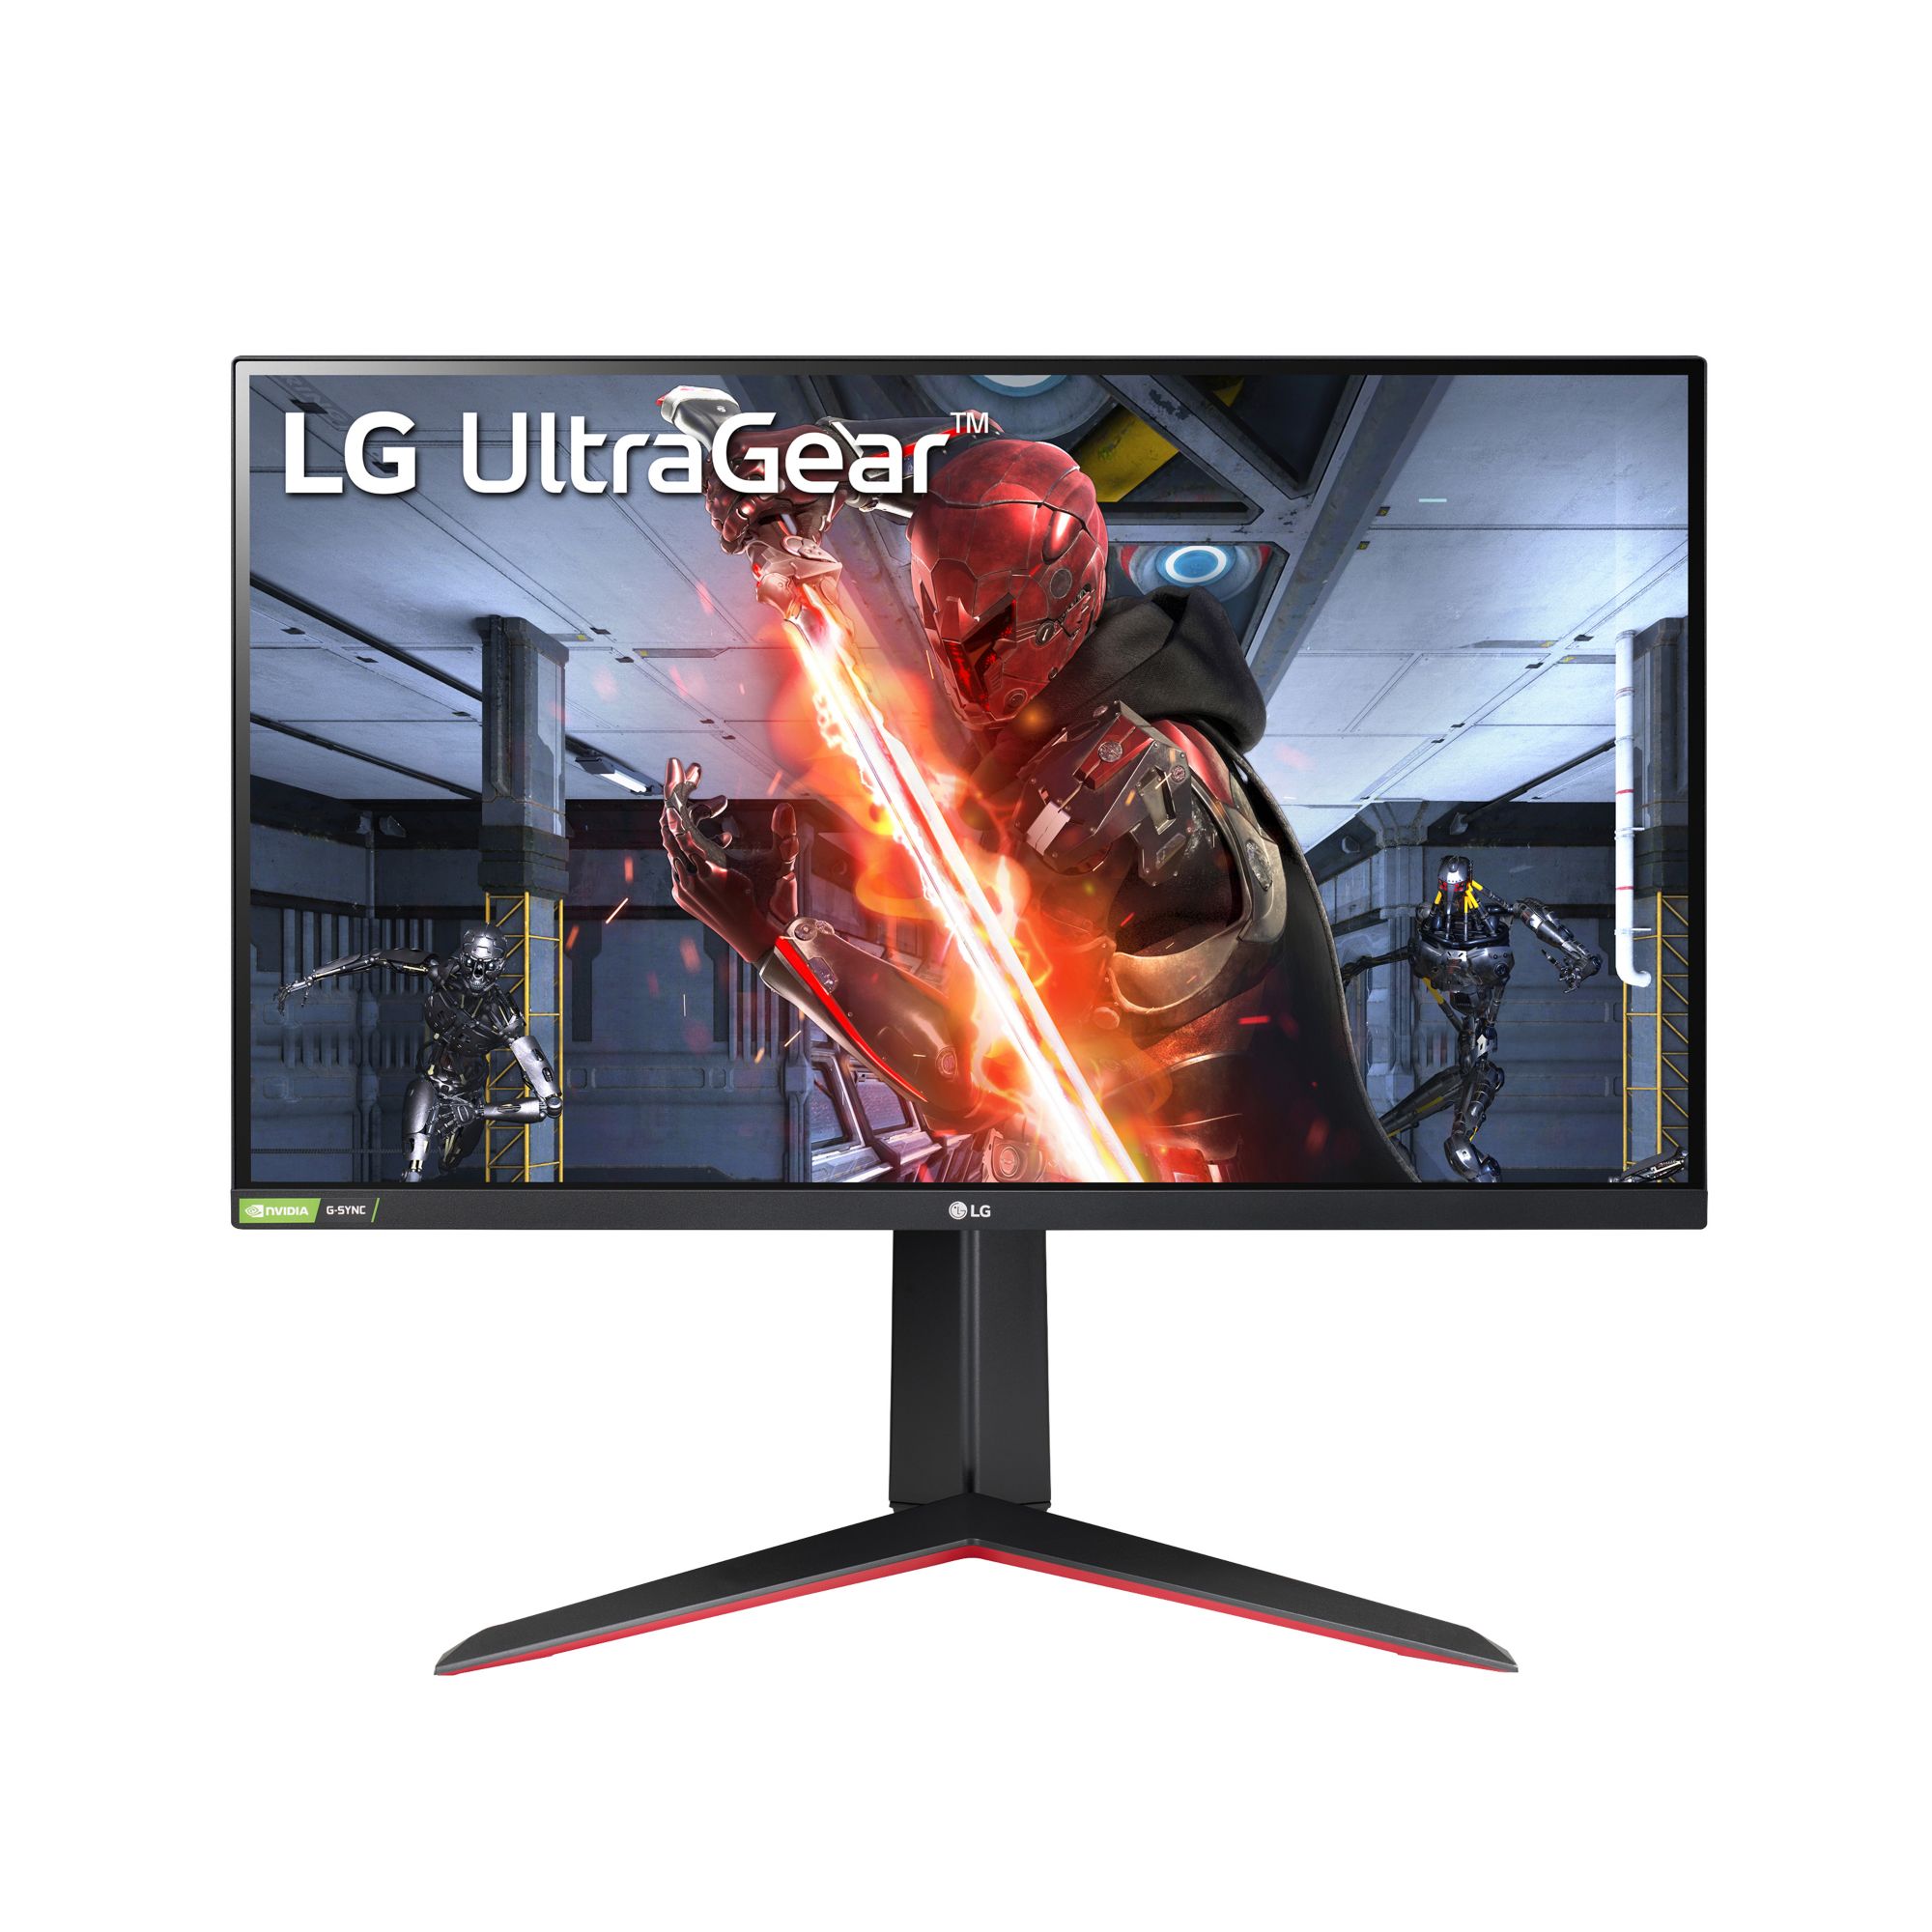 LG UltraGear Gaming Monitors 